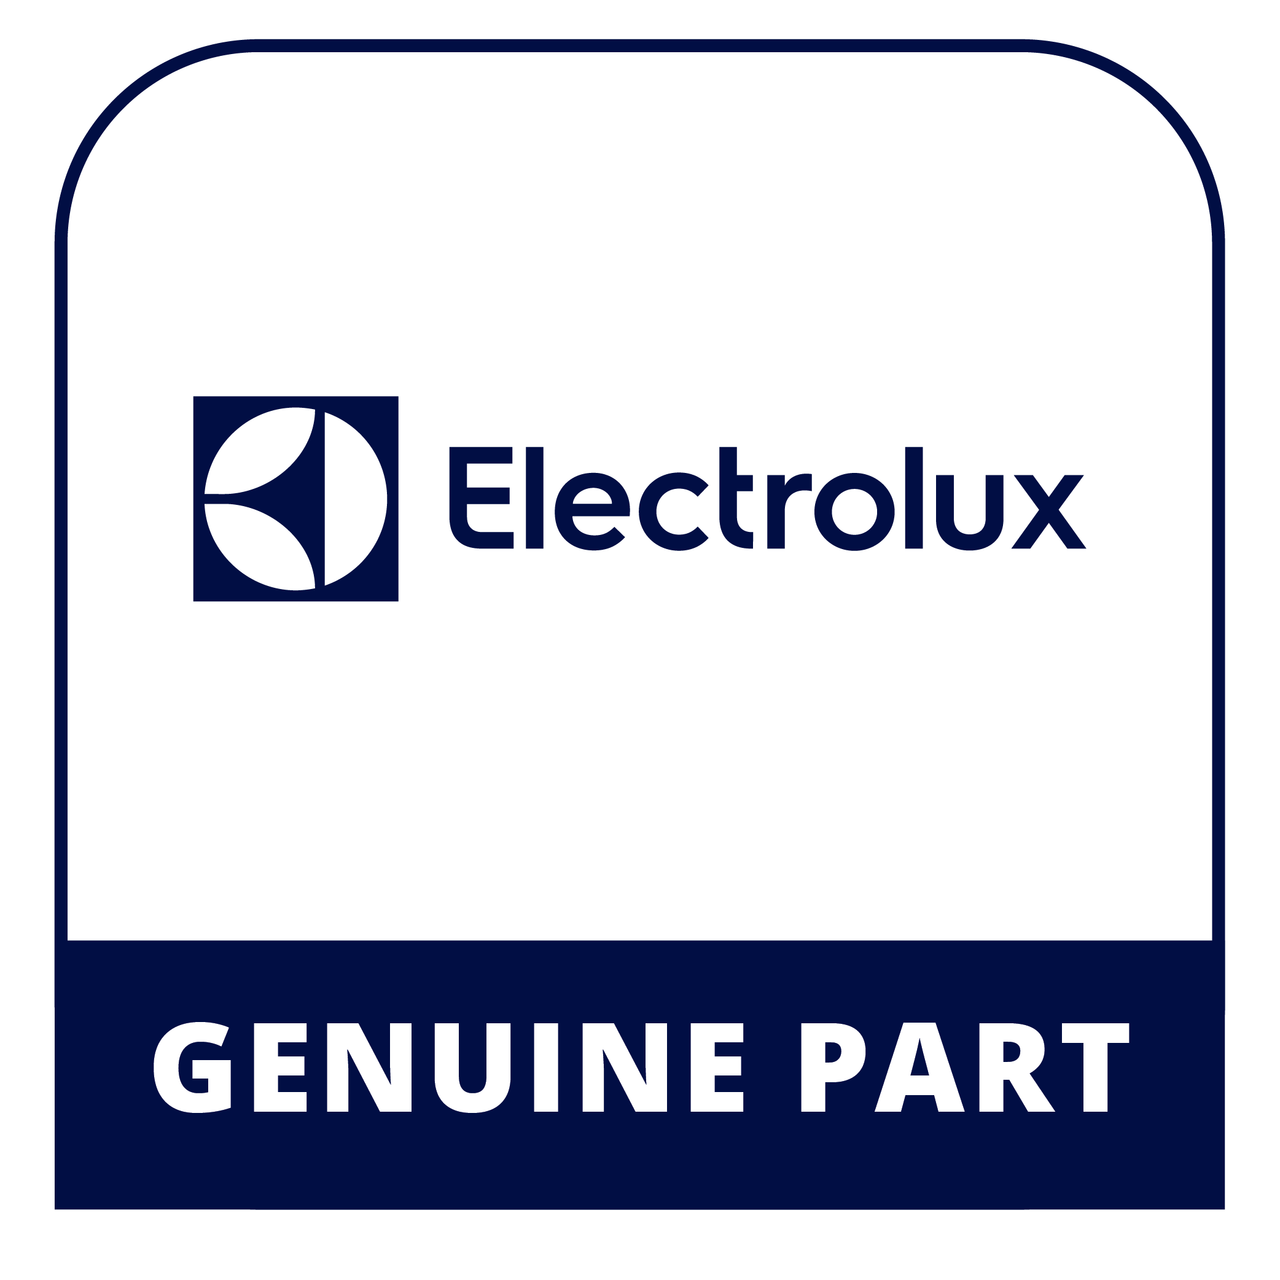 Frigidaire - Electrolux 318369301 Bracket - Genuine Electrolux Part